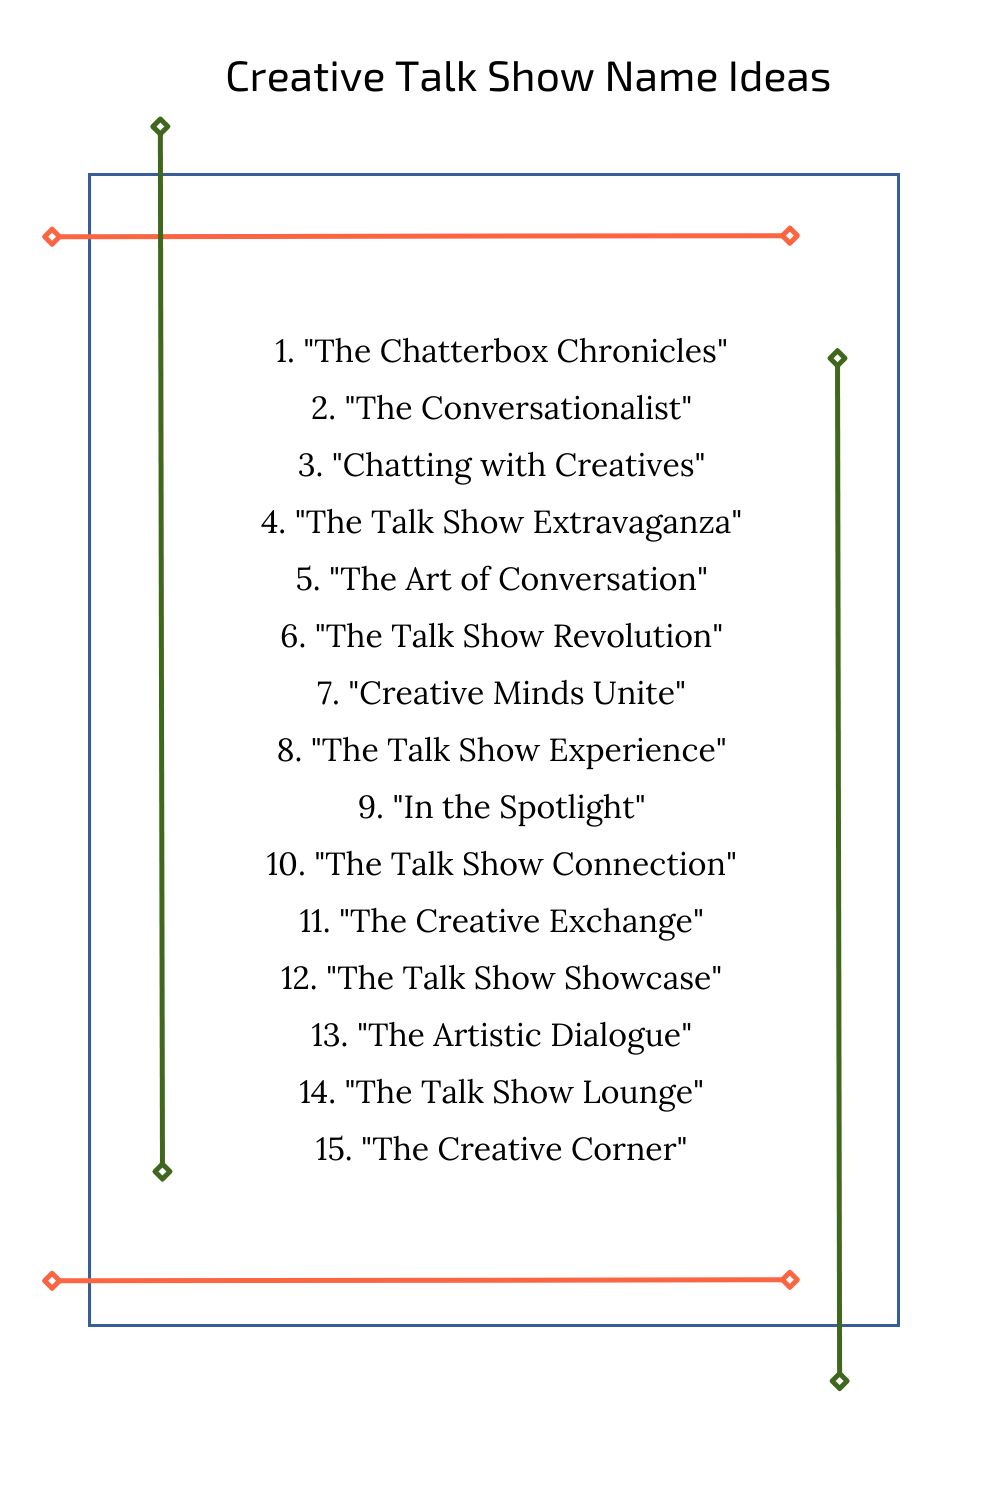 Creative Talk Show Name Ideas